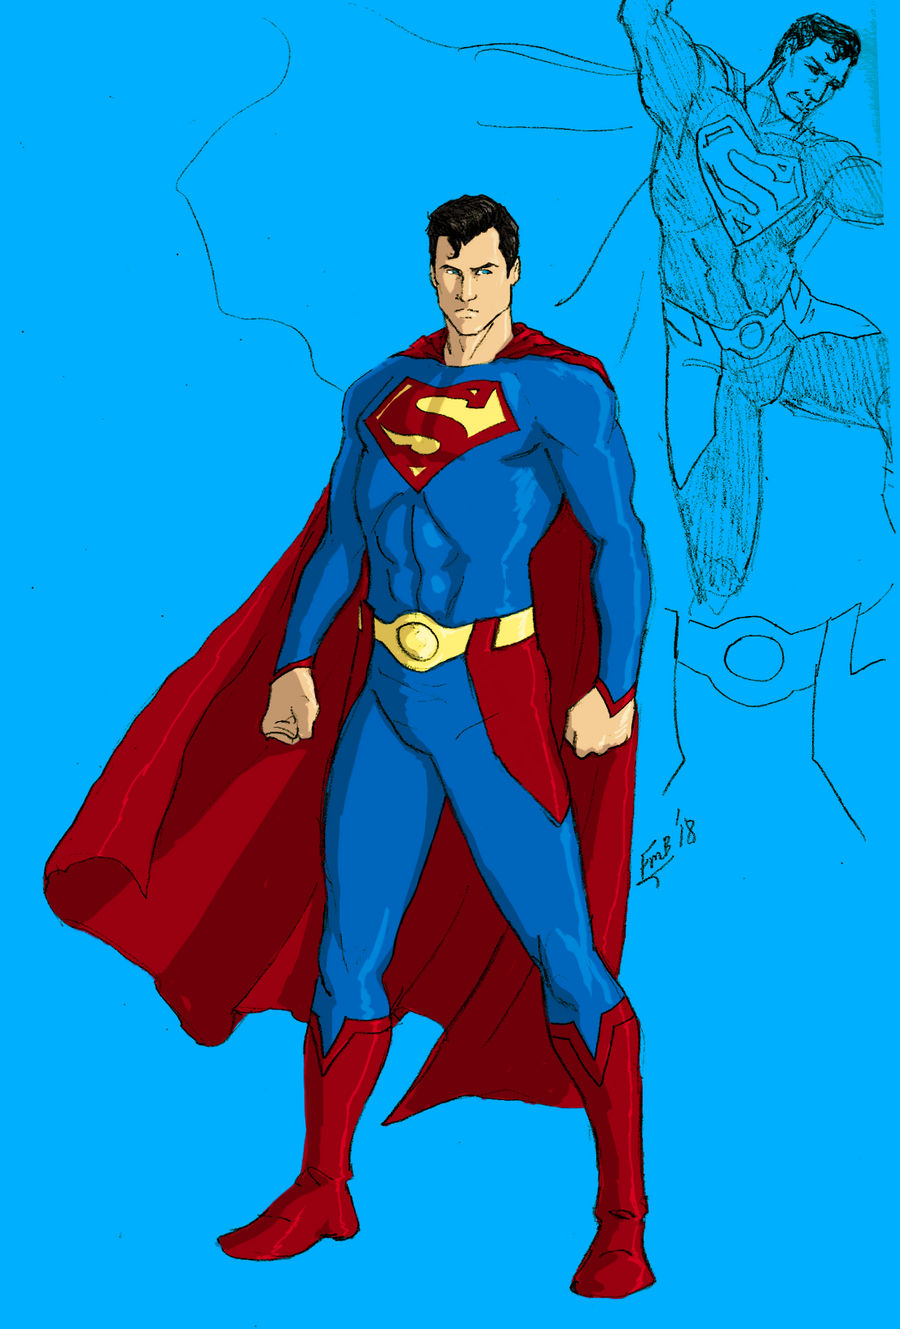 random_superman_redesign_by_kyomusha_dcmpg35-fullview.jpg